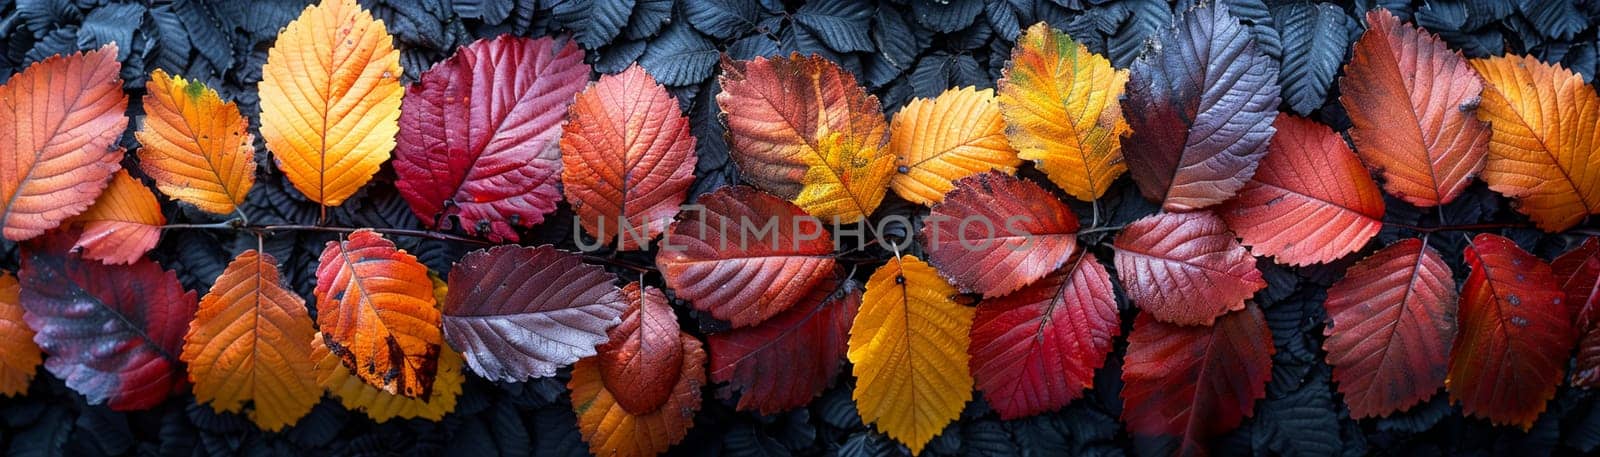 Close-up of colorful autumn foliage, capturing the essence of the season.